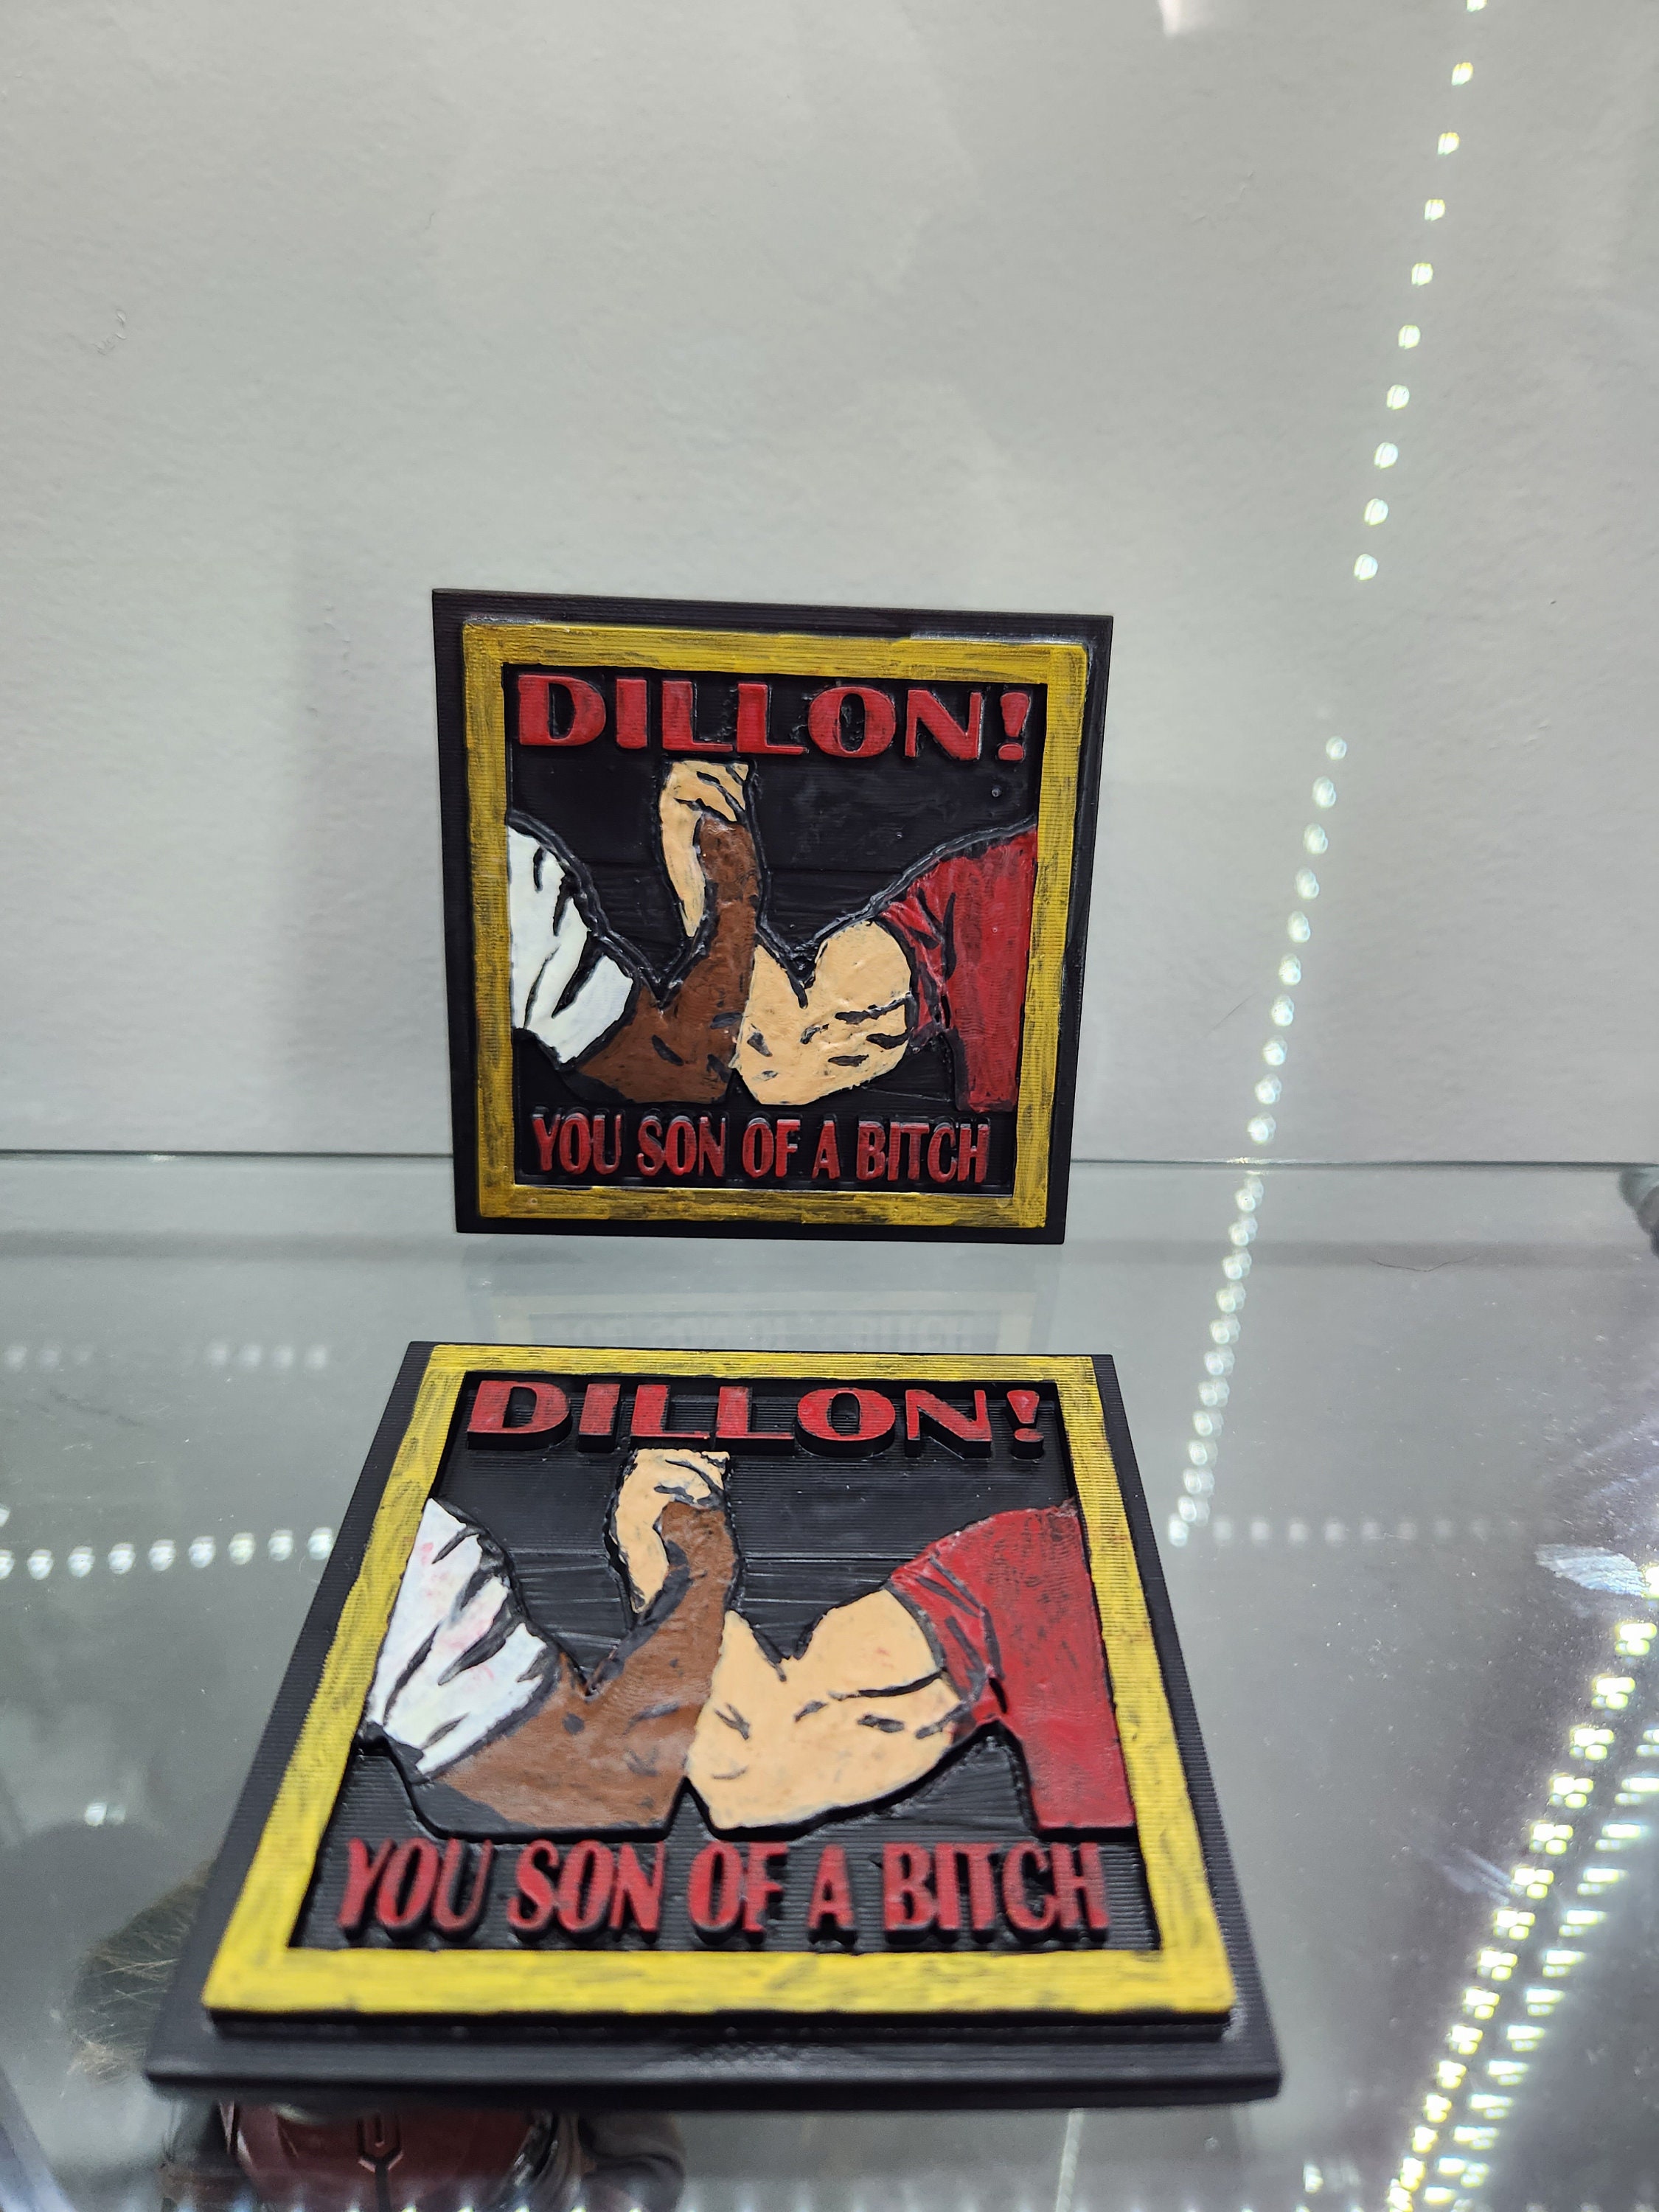 Dillon You Son Of A Bitch Predator Epic Handshake | Greeting Card